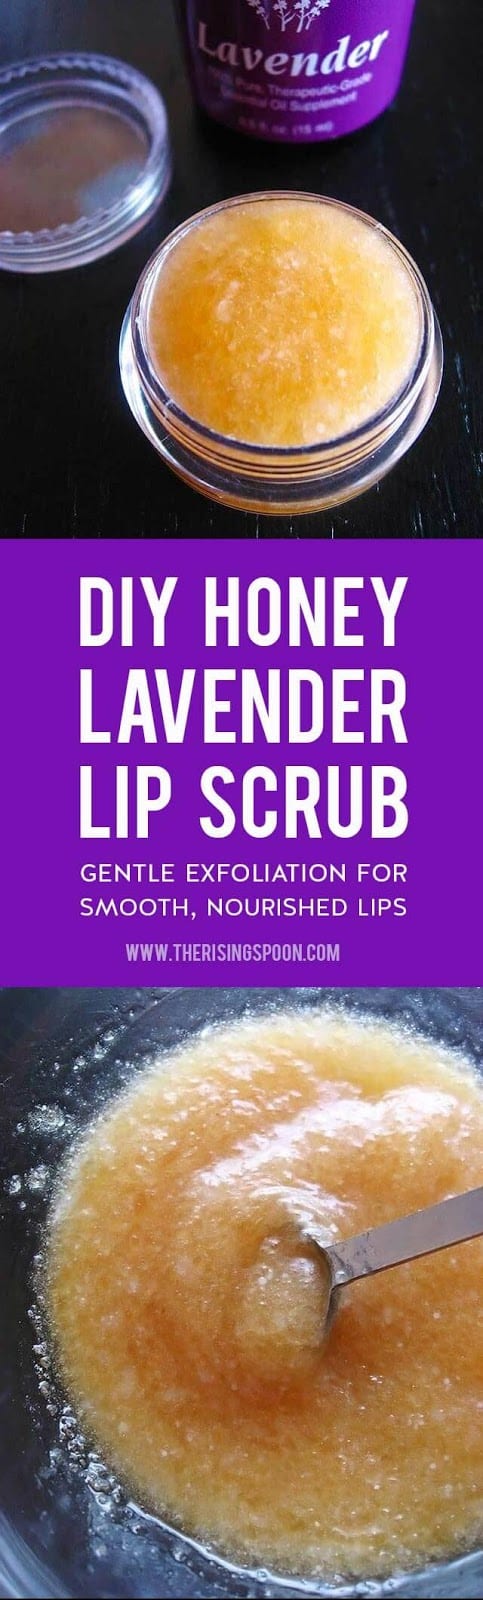 DIY honey lavender lip scrub